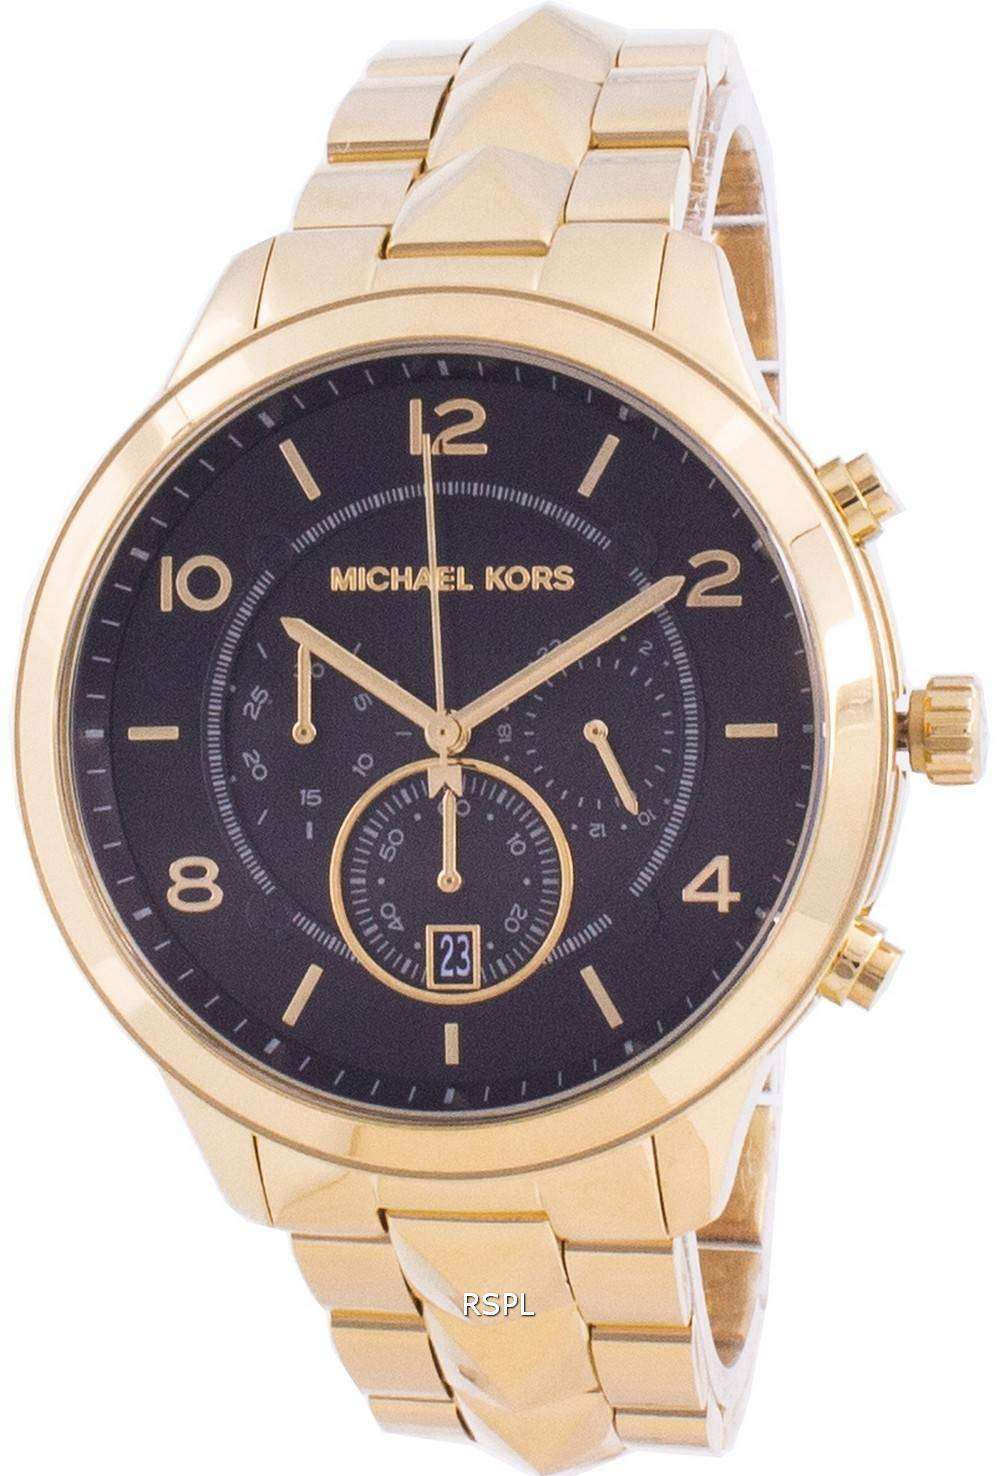 Mucama Golpeteo temor Michael Kors Runway Mercer MK6712 Reloj cronógrafo de cuarzo para mujer -  citywatches.es